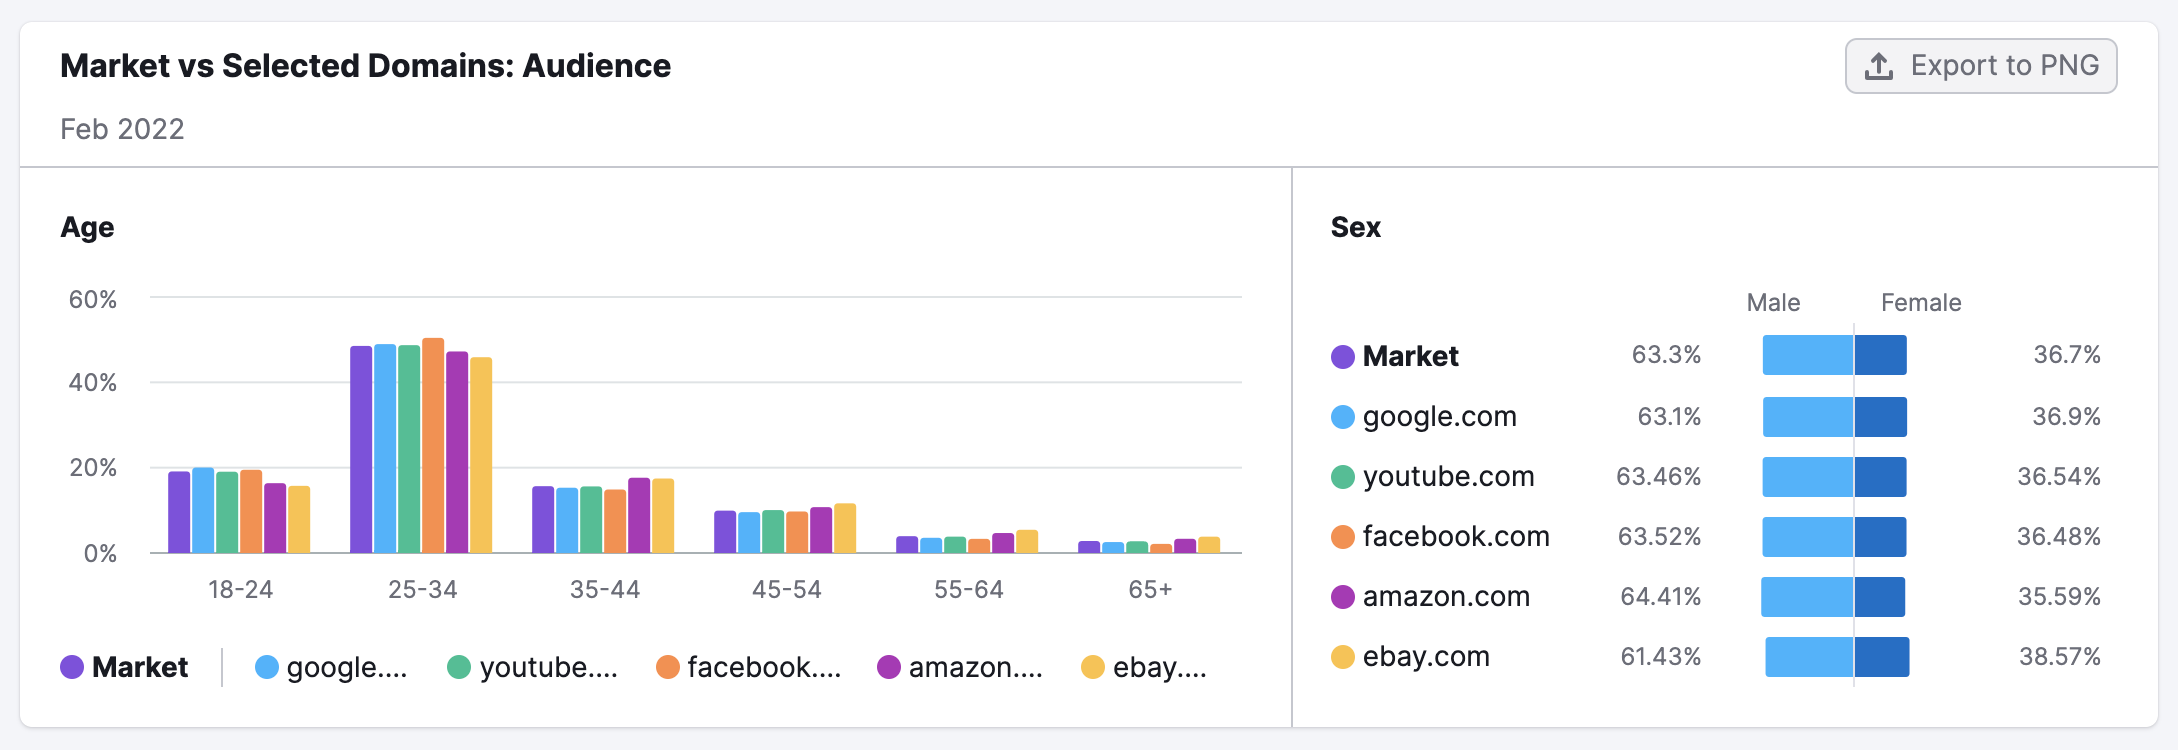 Market Explorer Market vs Selected Domains Audience